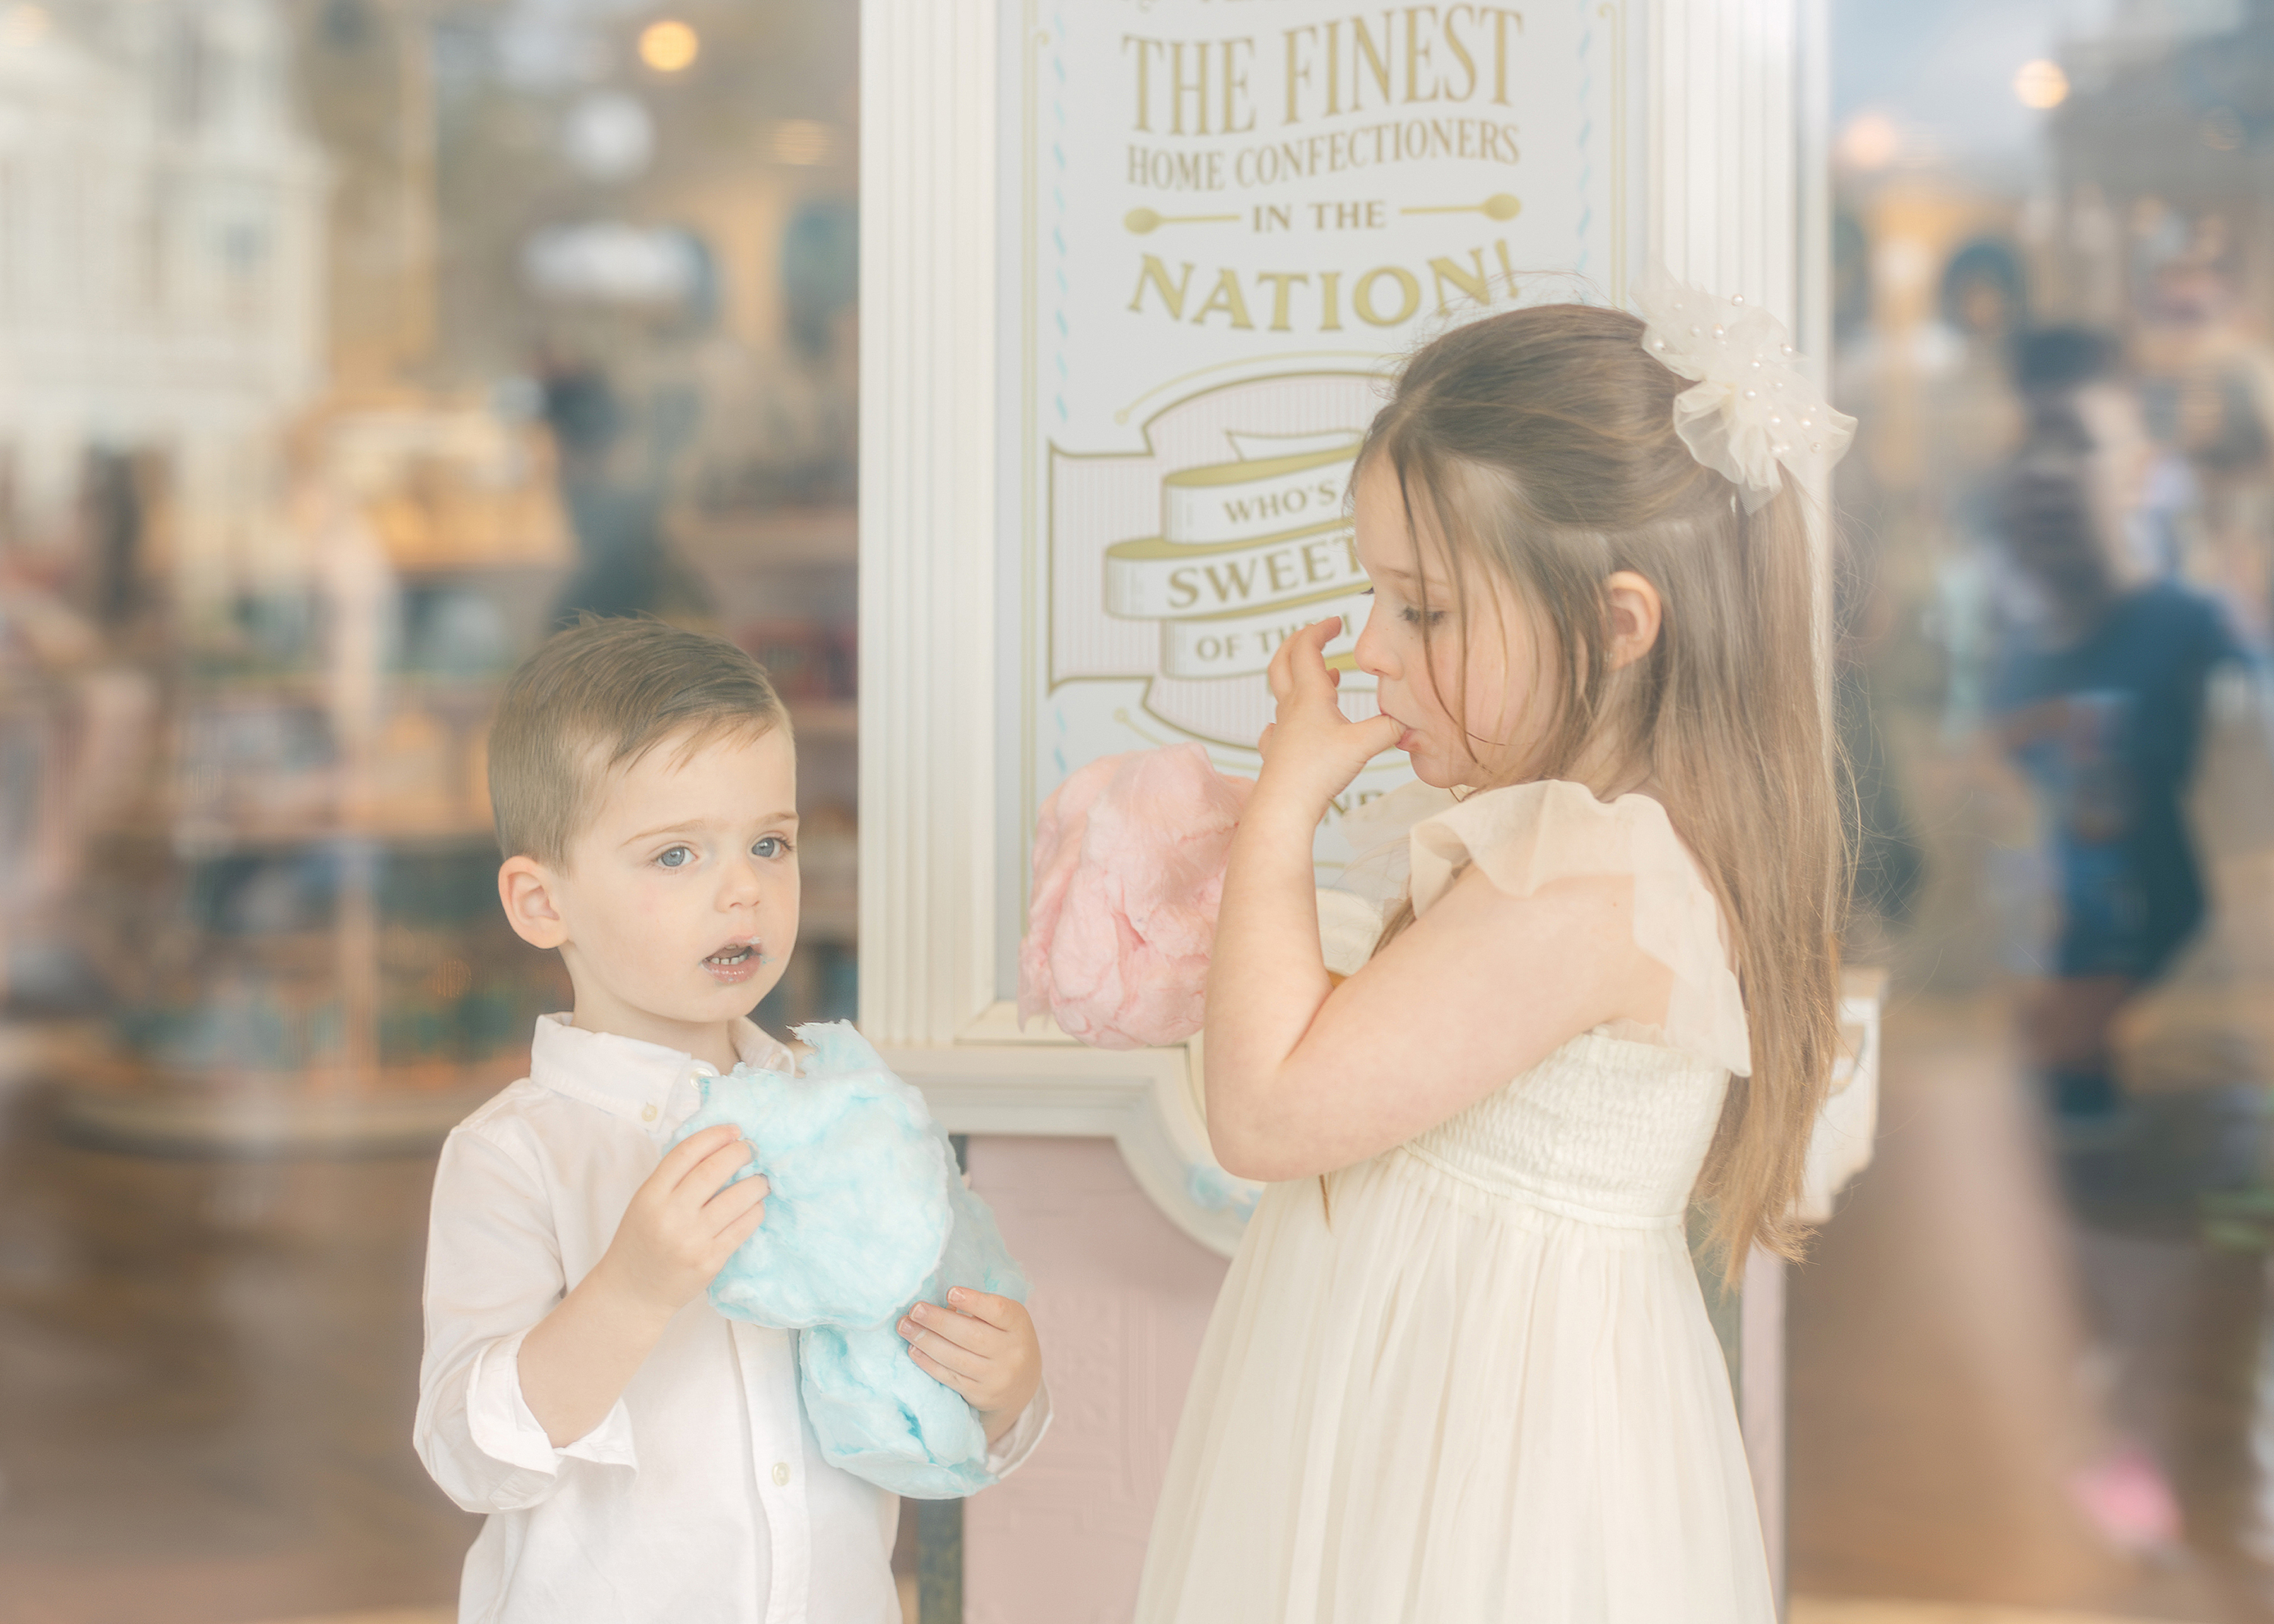 Two little children eat cotton candy together inside Main Street U.S.A confection shop at Magic Kingdom Park.